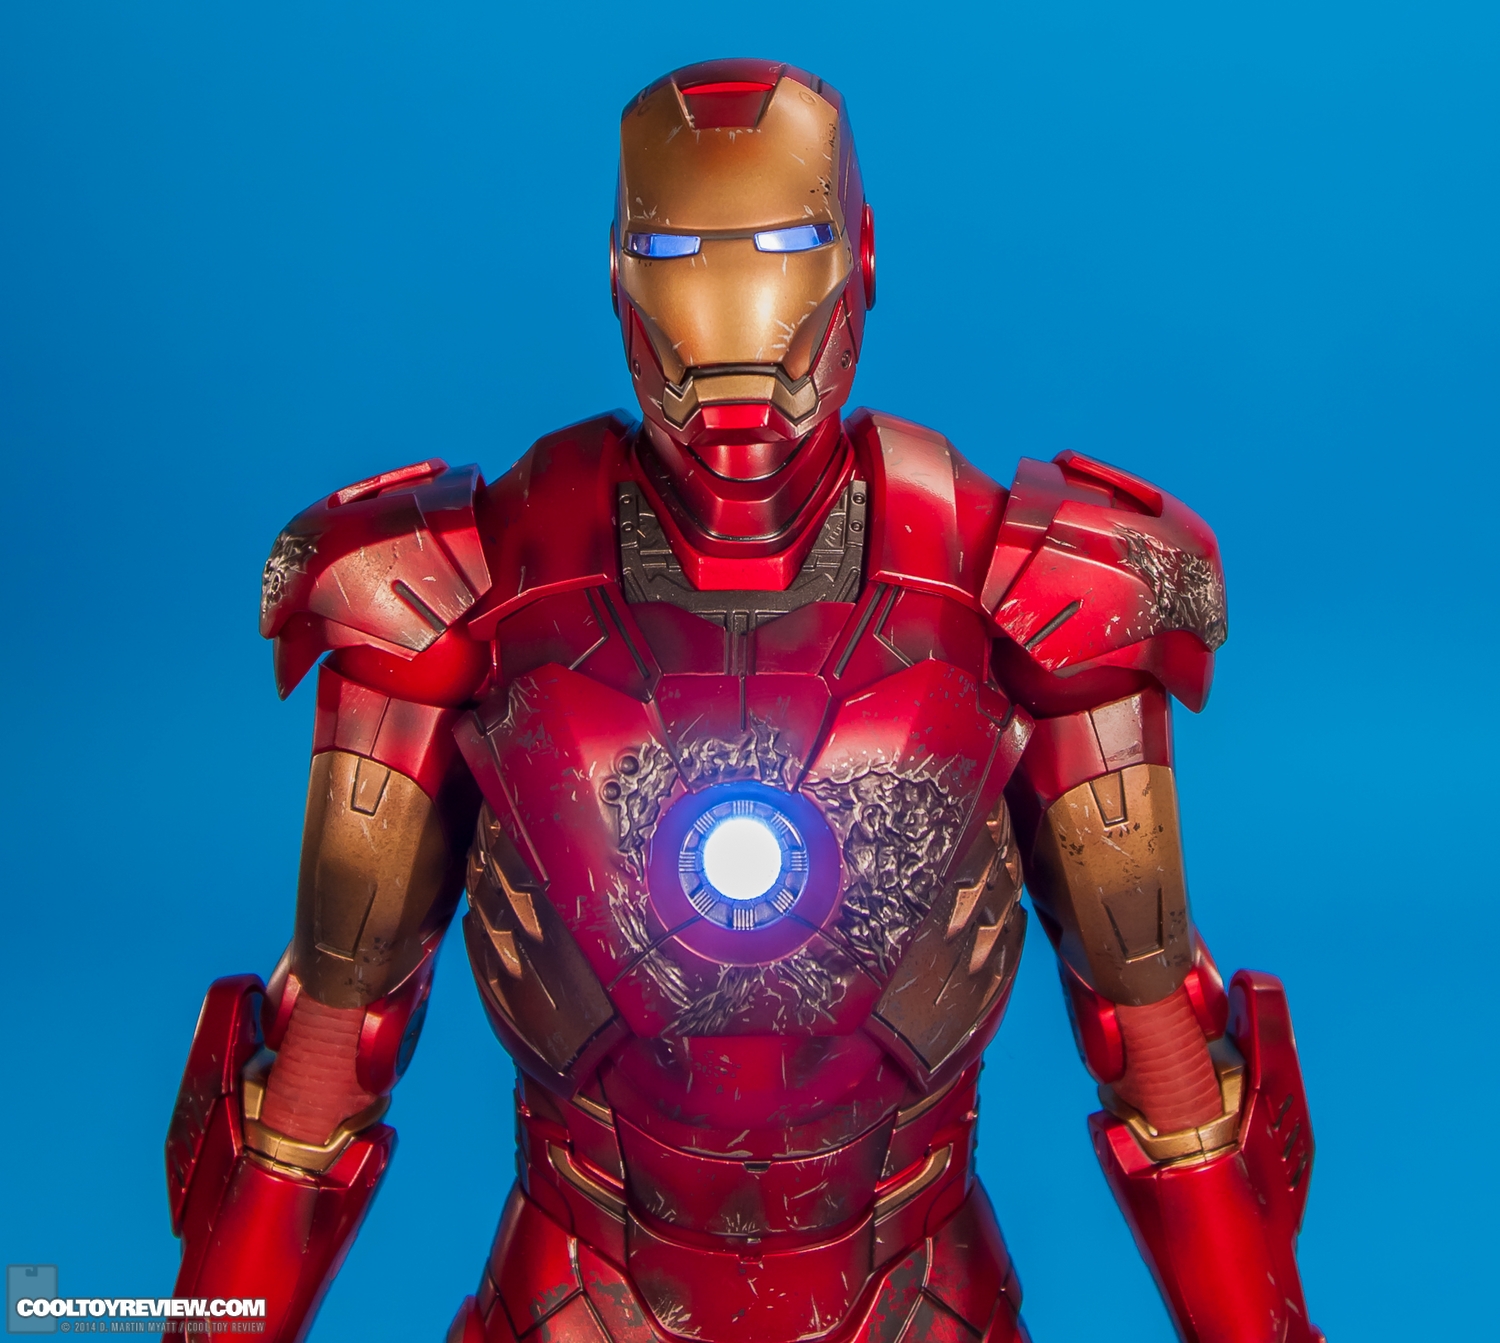 Iron-Man-Mark-VII-Battle-Damaged-Avengers-Hot-Toys-005.jpg